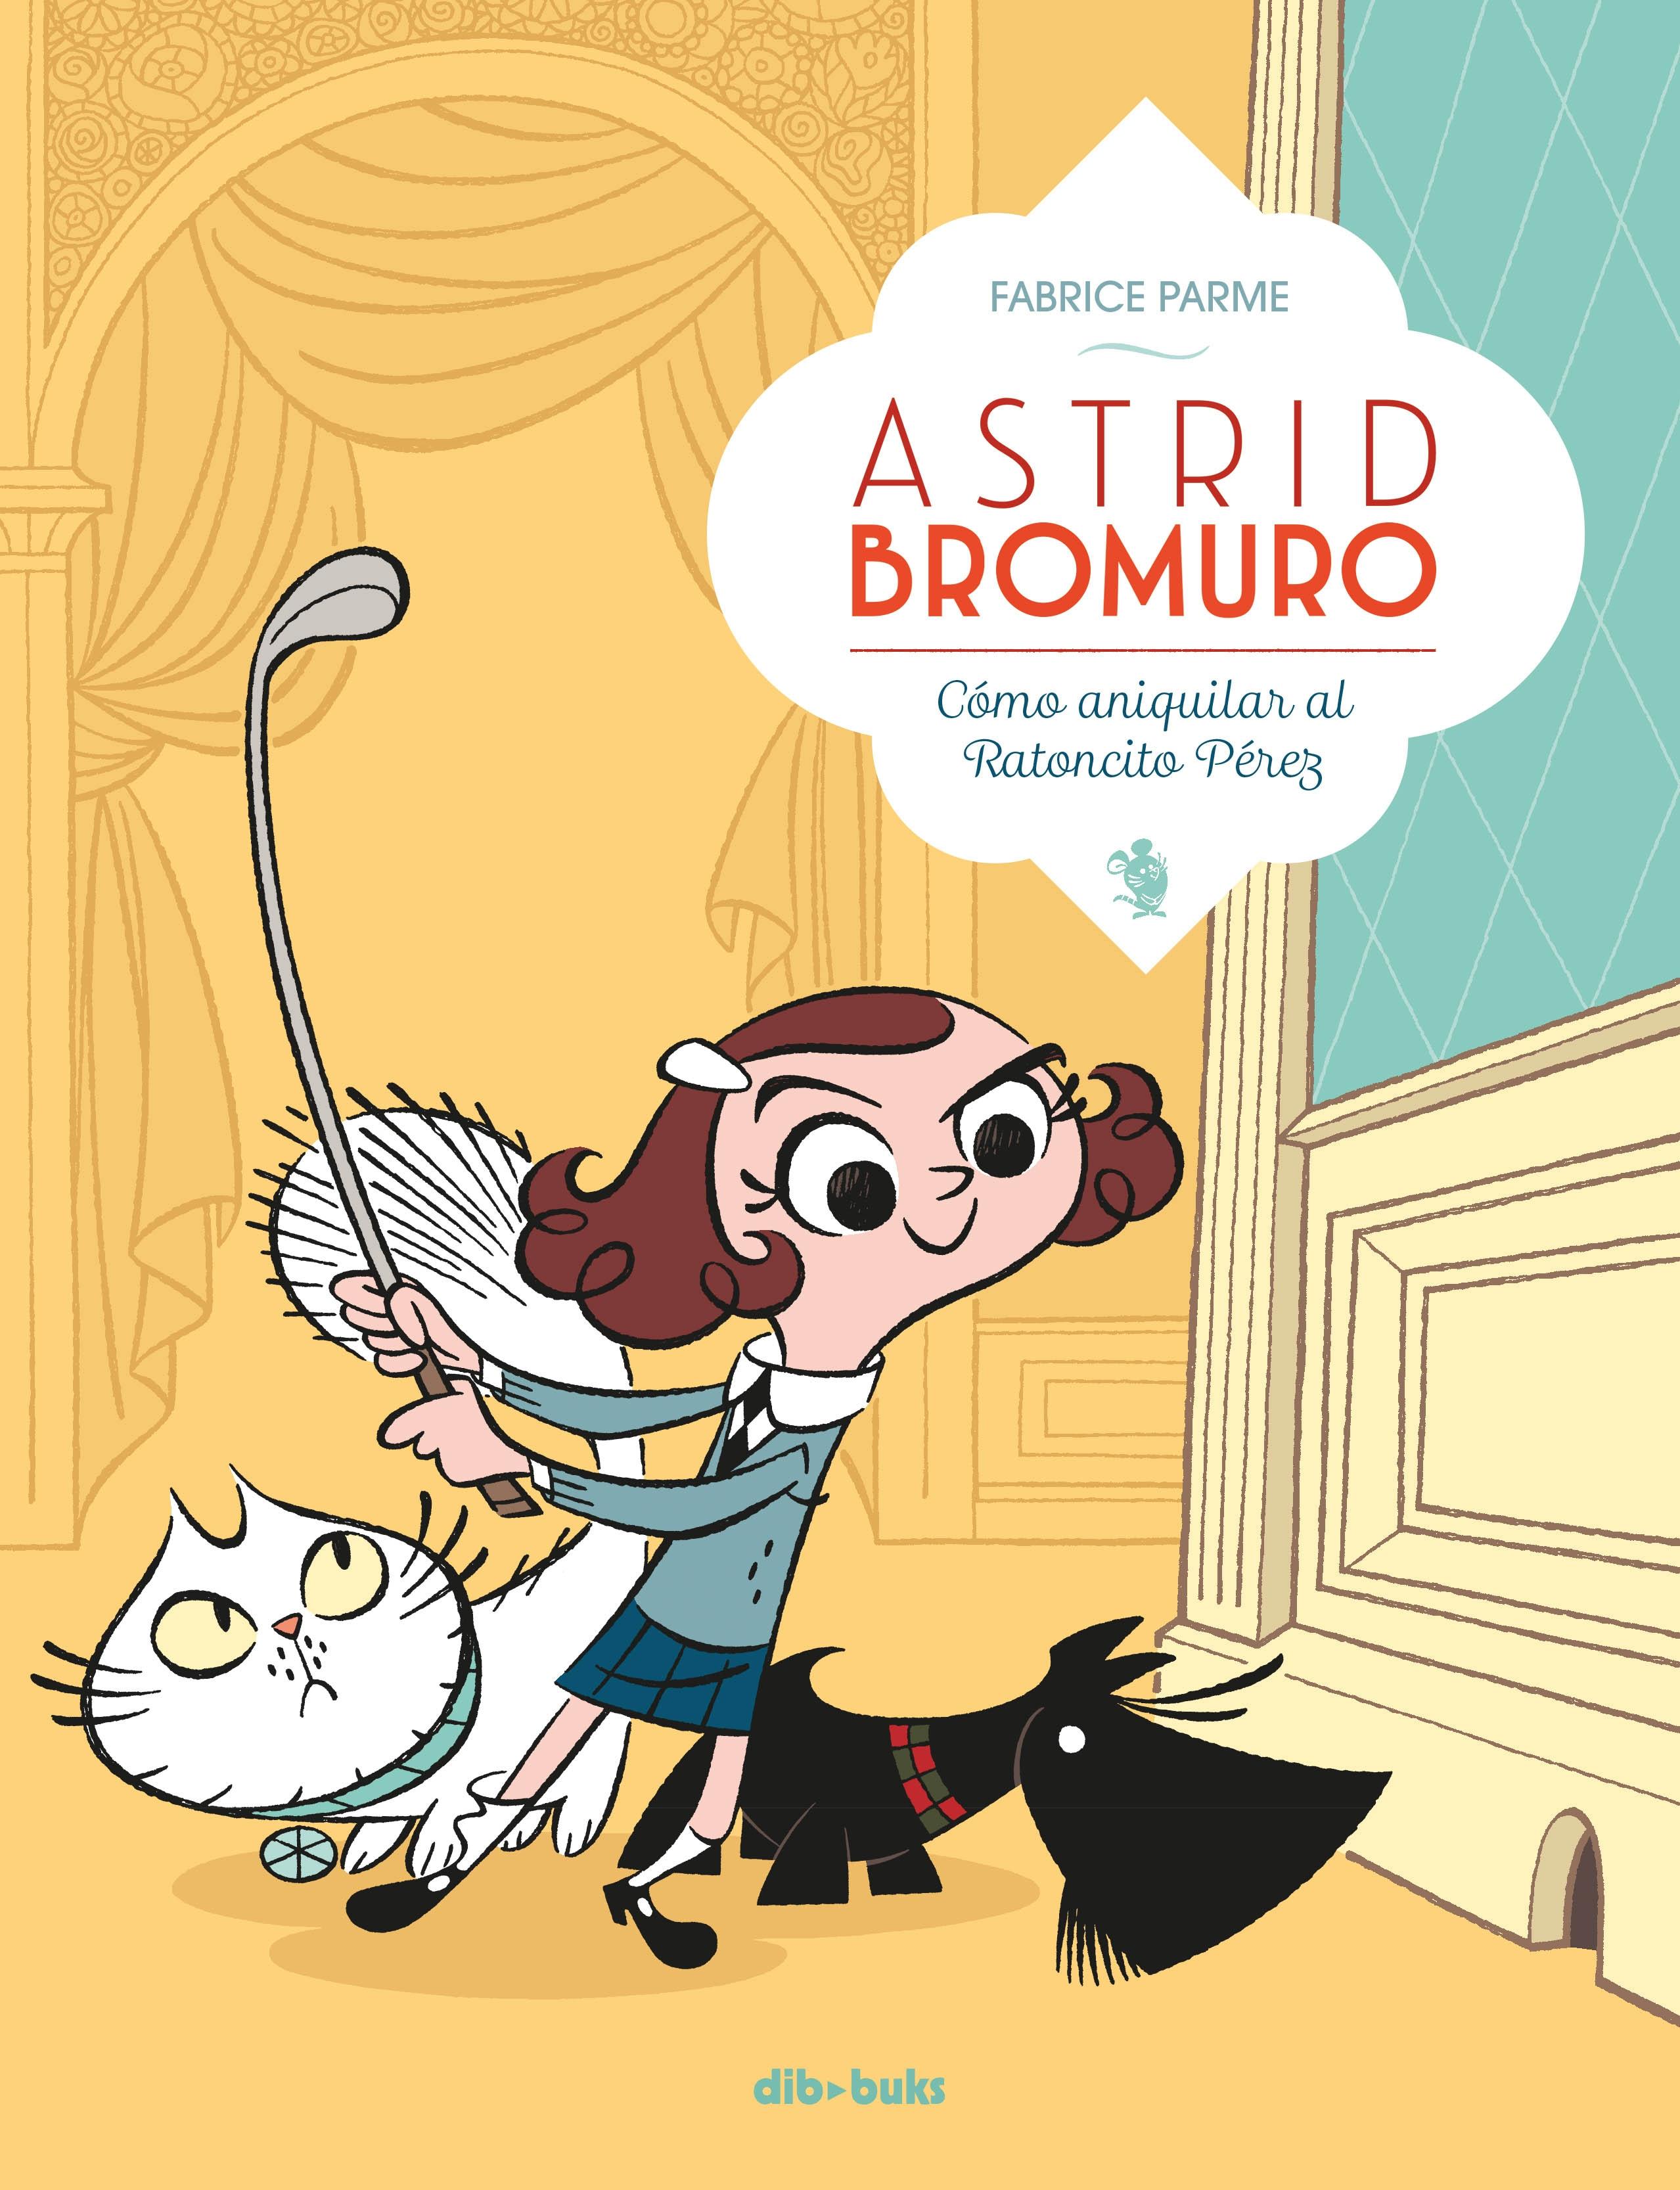 Astrid Bromuro 1 "Cómo Aniquilar al Ratoncito Pérez". 